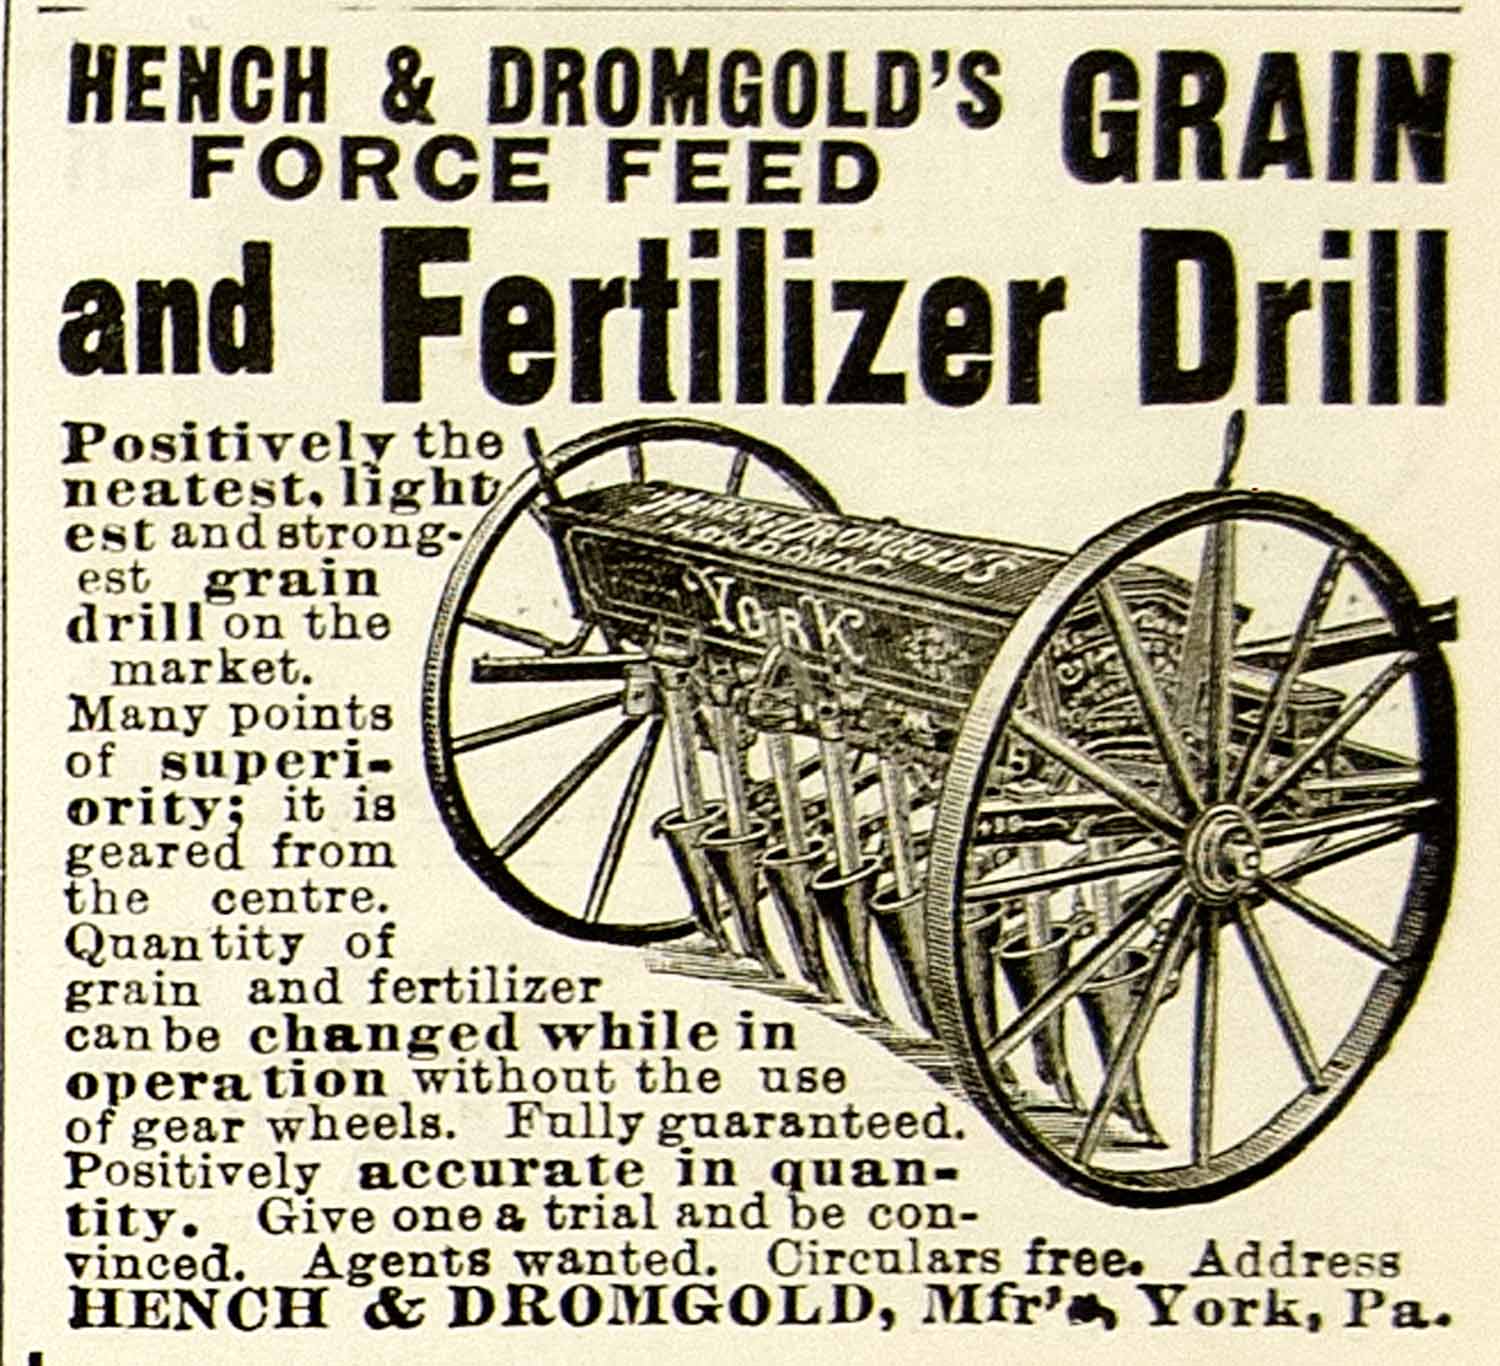 1898 Ad Hench Dromgold Grain Fertilizer Drill Farming Equipment Implement CG3